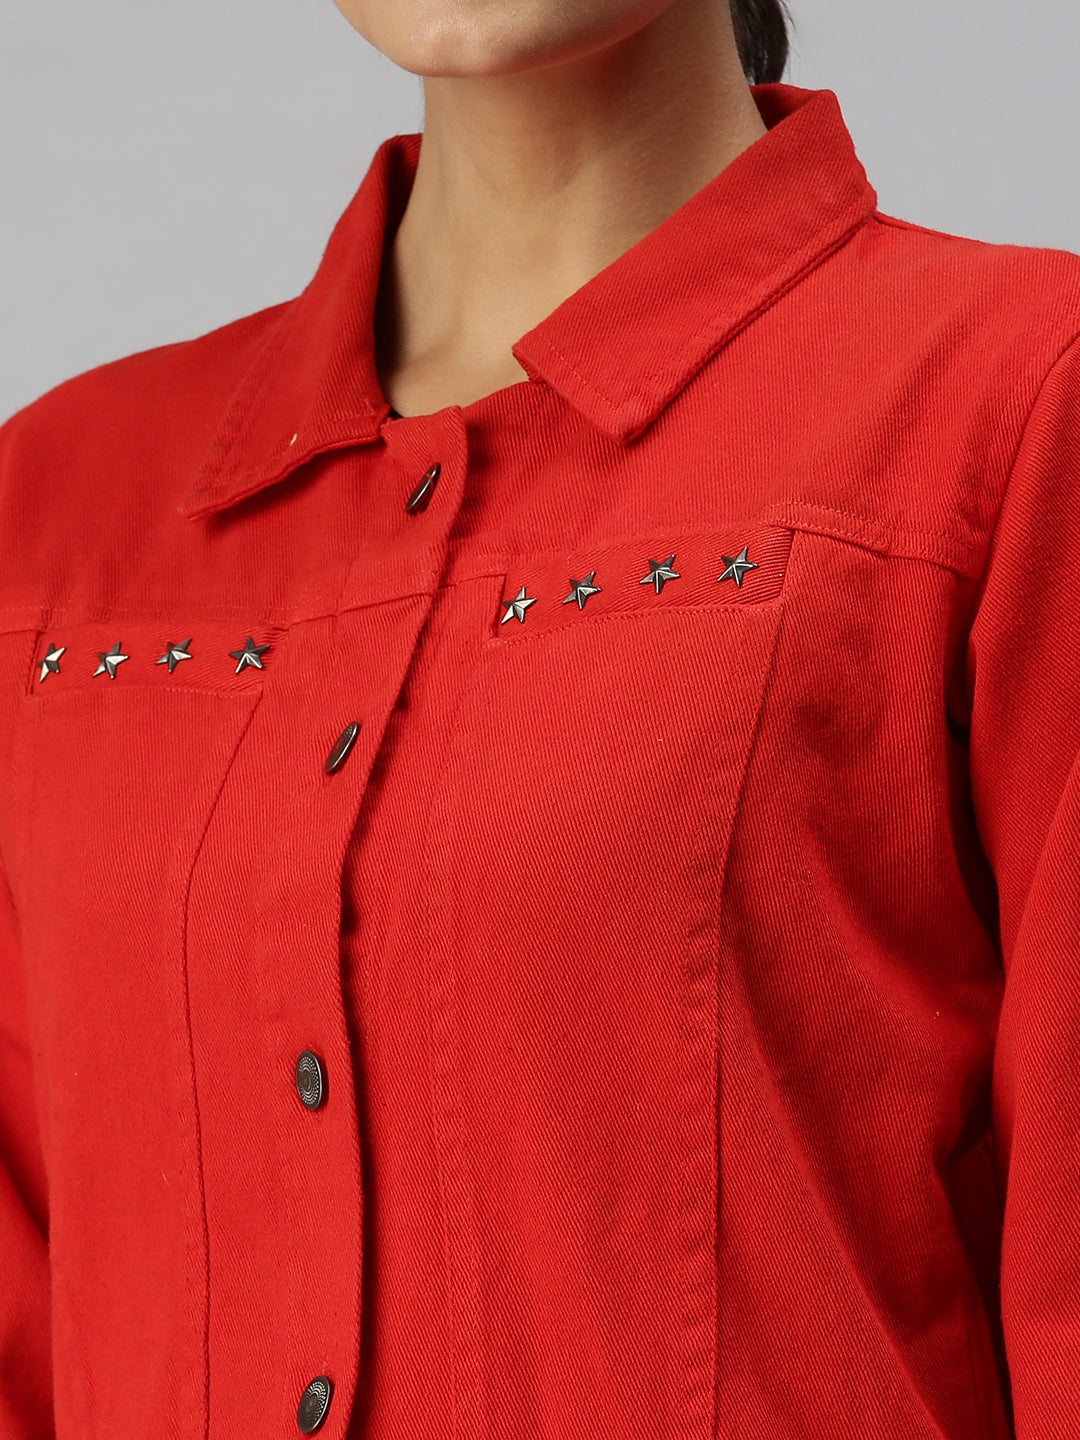 Women's Red Solid Denim Jacket Jackets